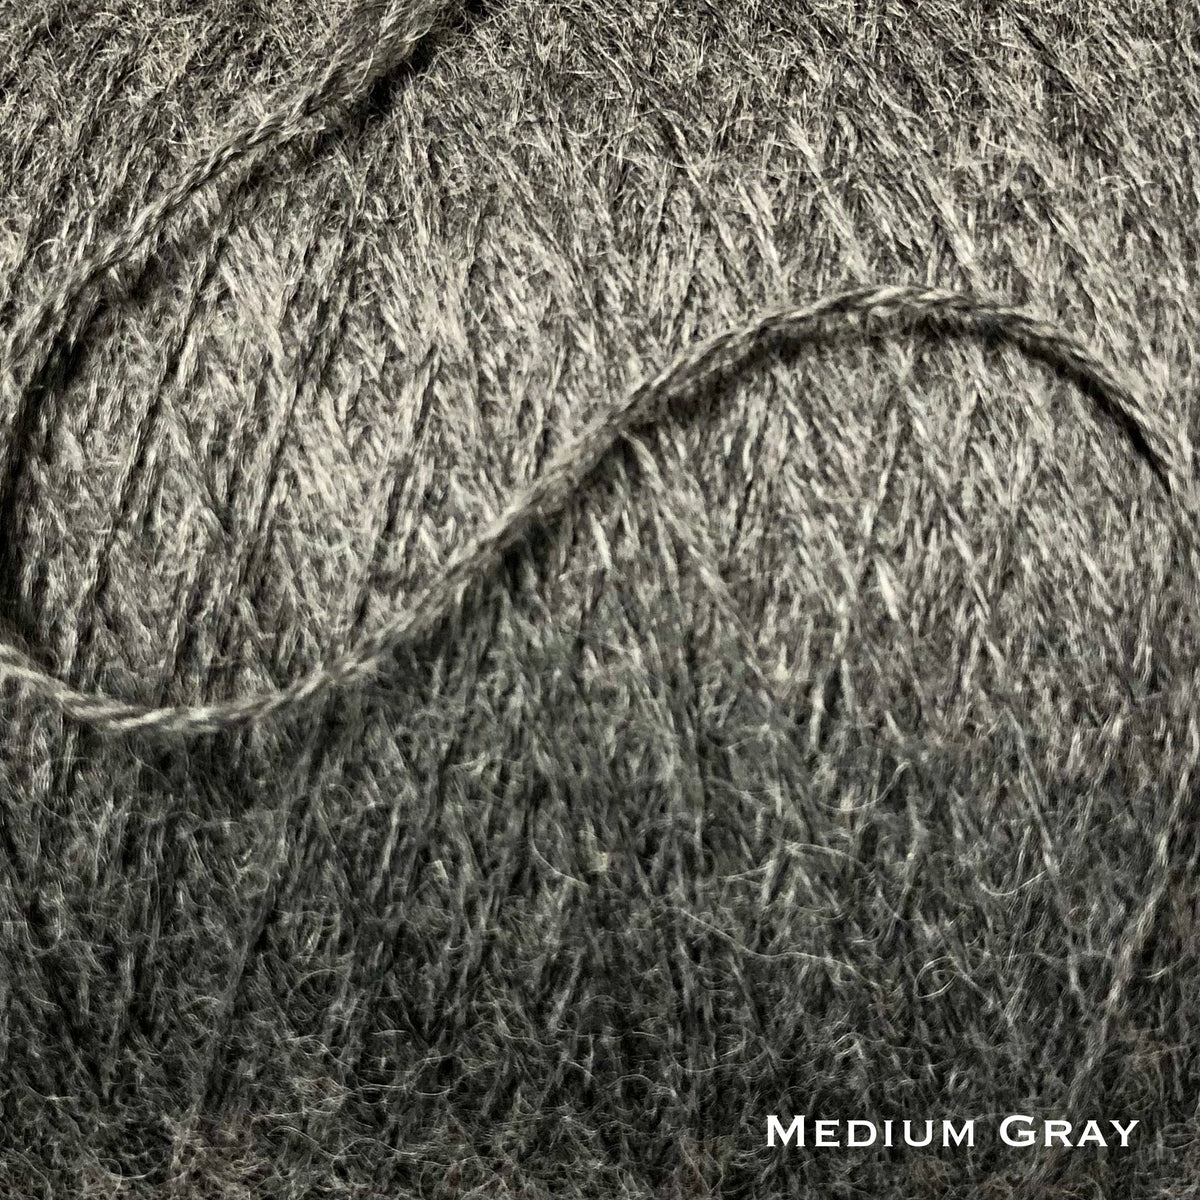 medium gray sport weight alpaca wool yarn for knitting and crochet